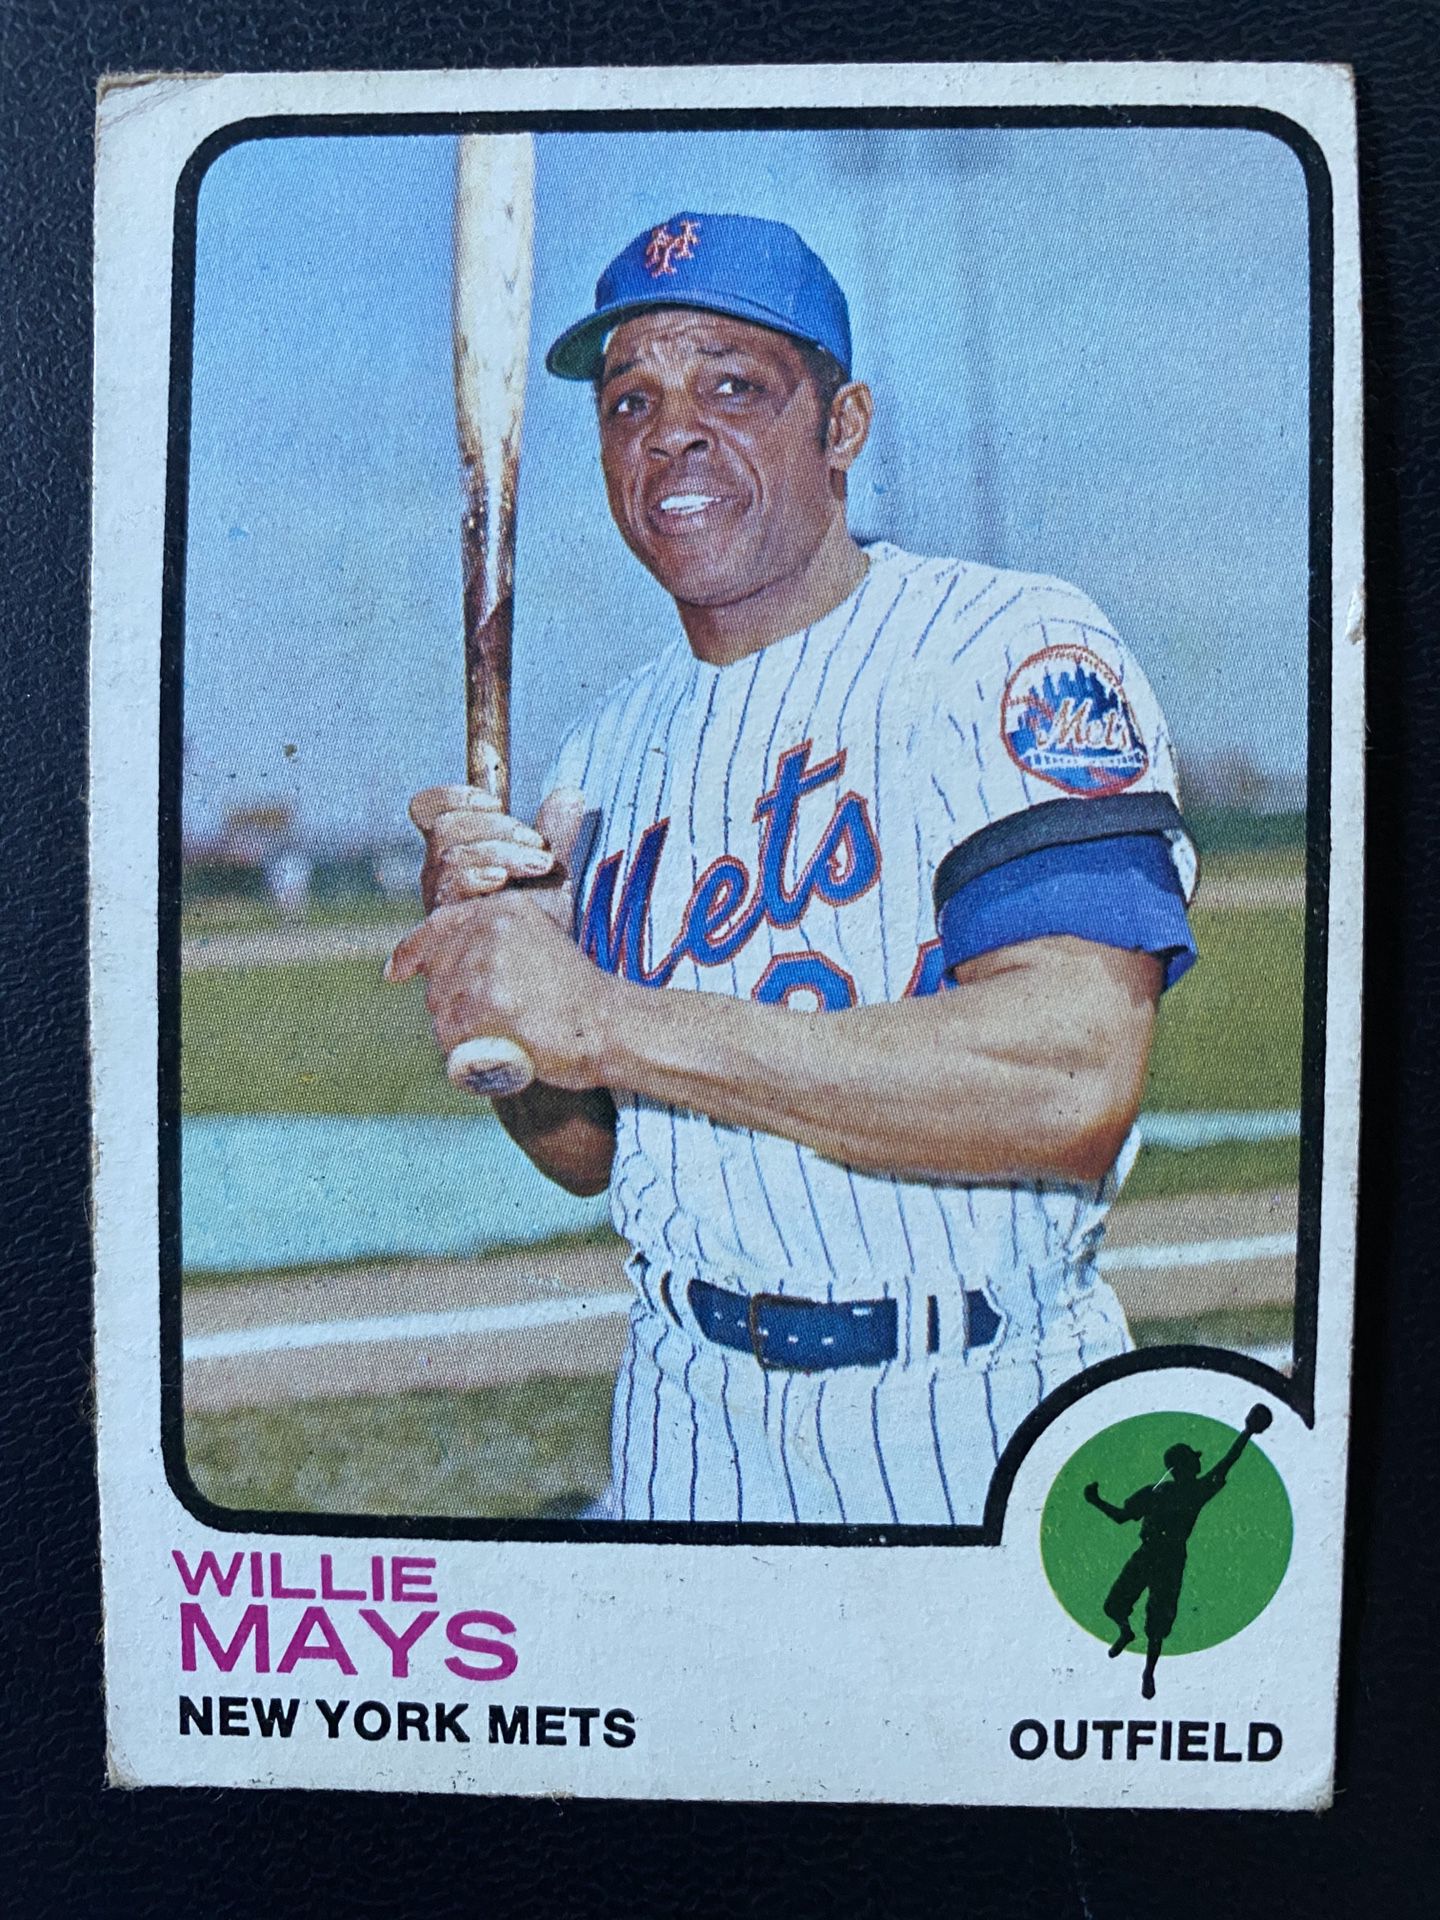 1973 Topps baseball Willie Mays card